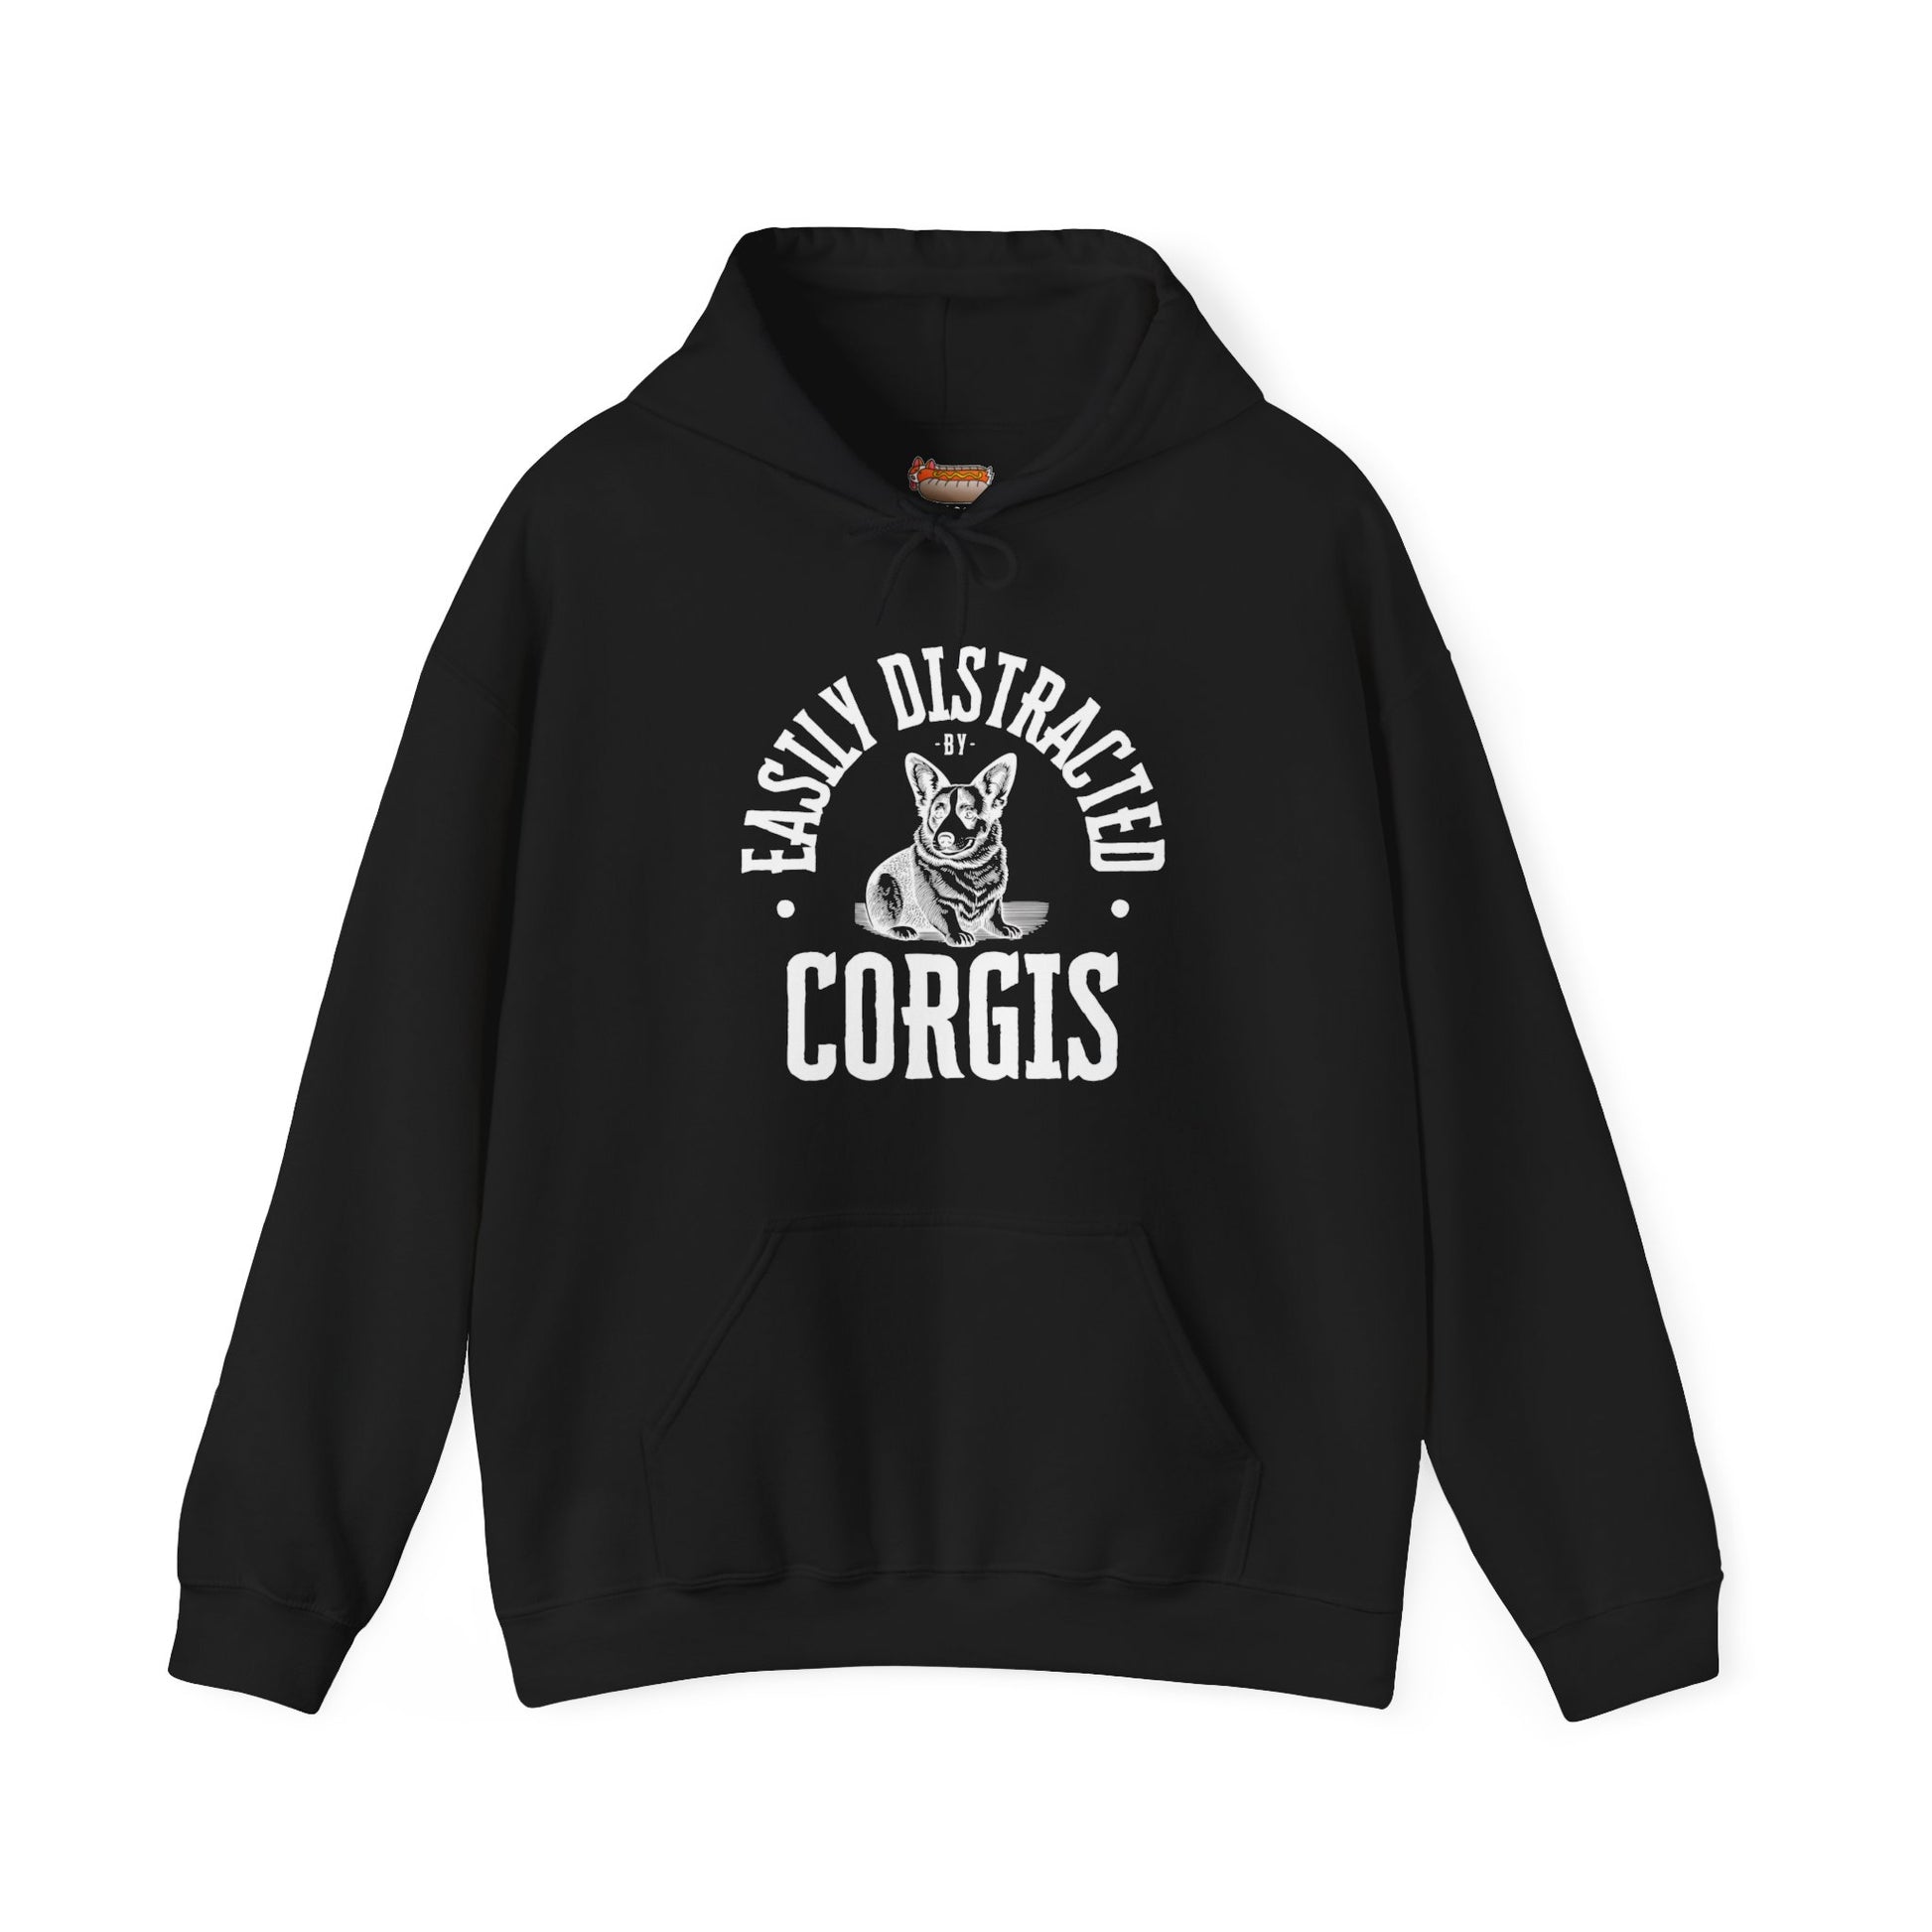 black dark corgi hoodie easily distracted women men sweatshirt shirt